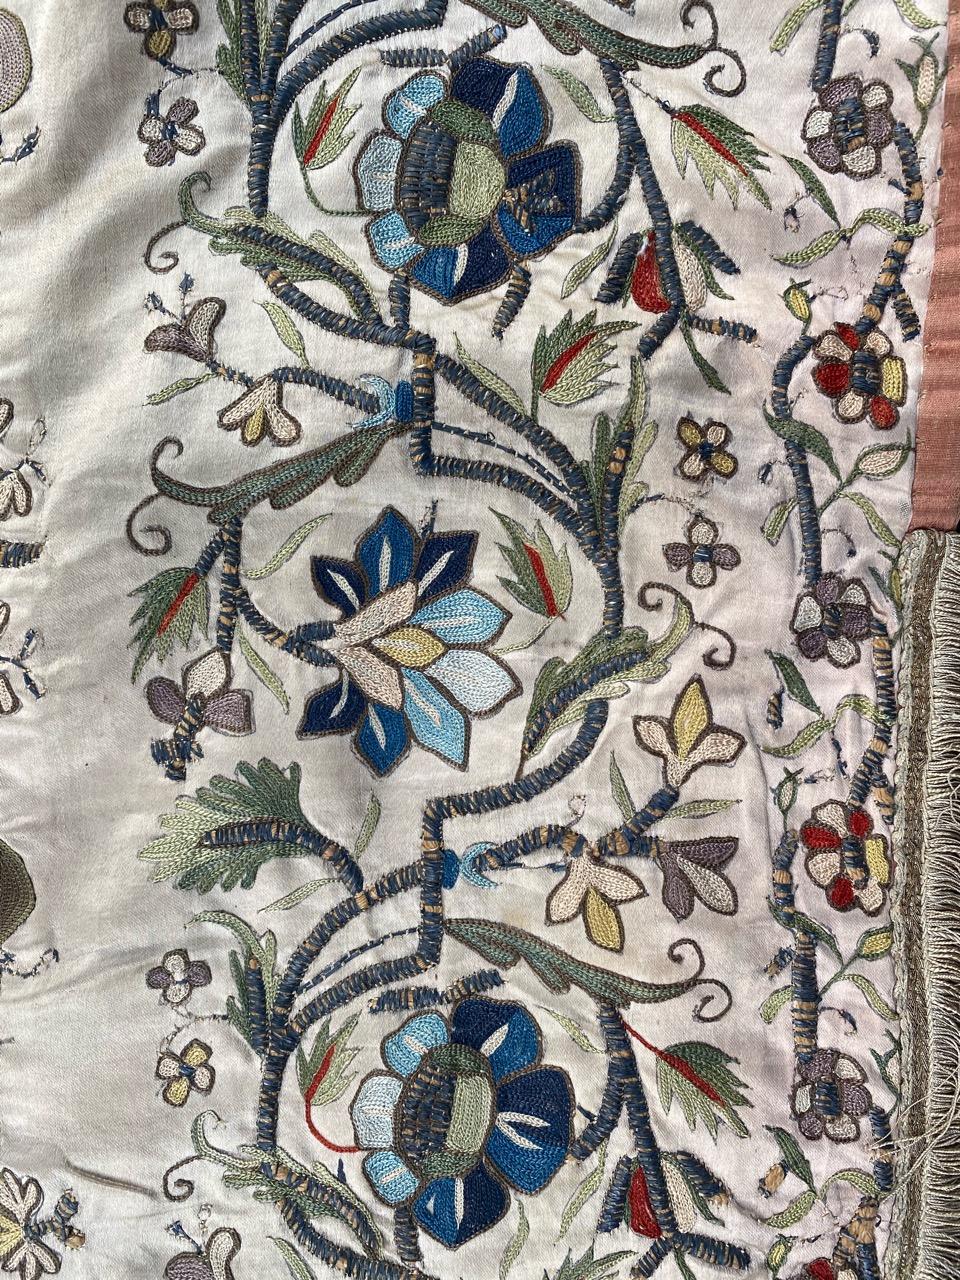 Bobyrug’s Wonderful Antique Turkish Ottoman Embroidery 7